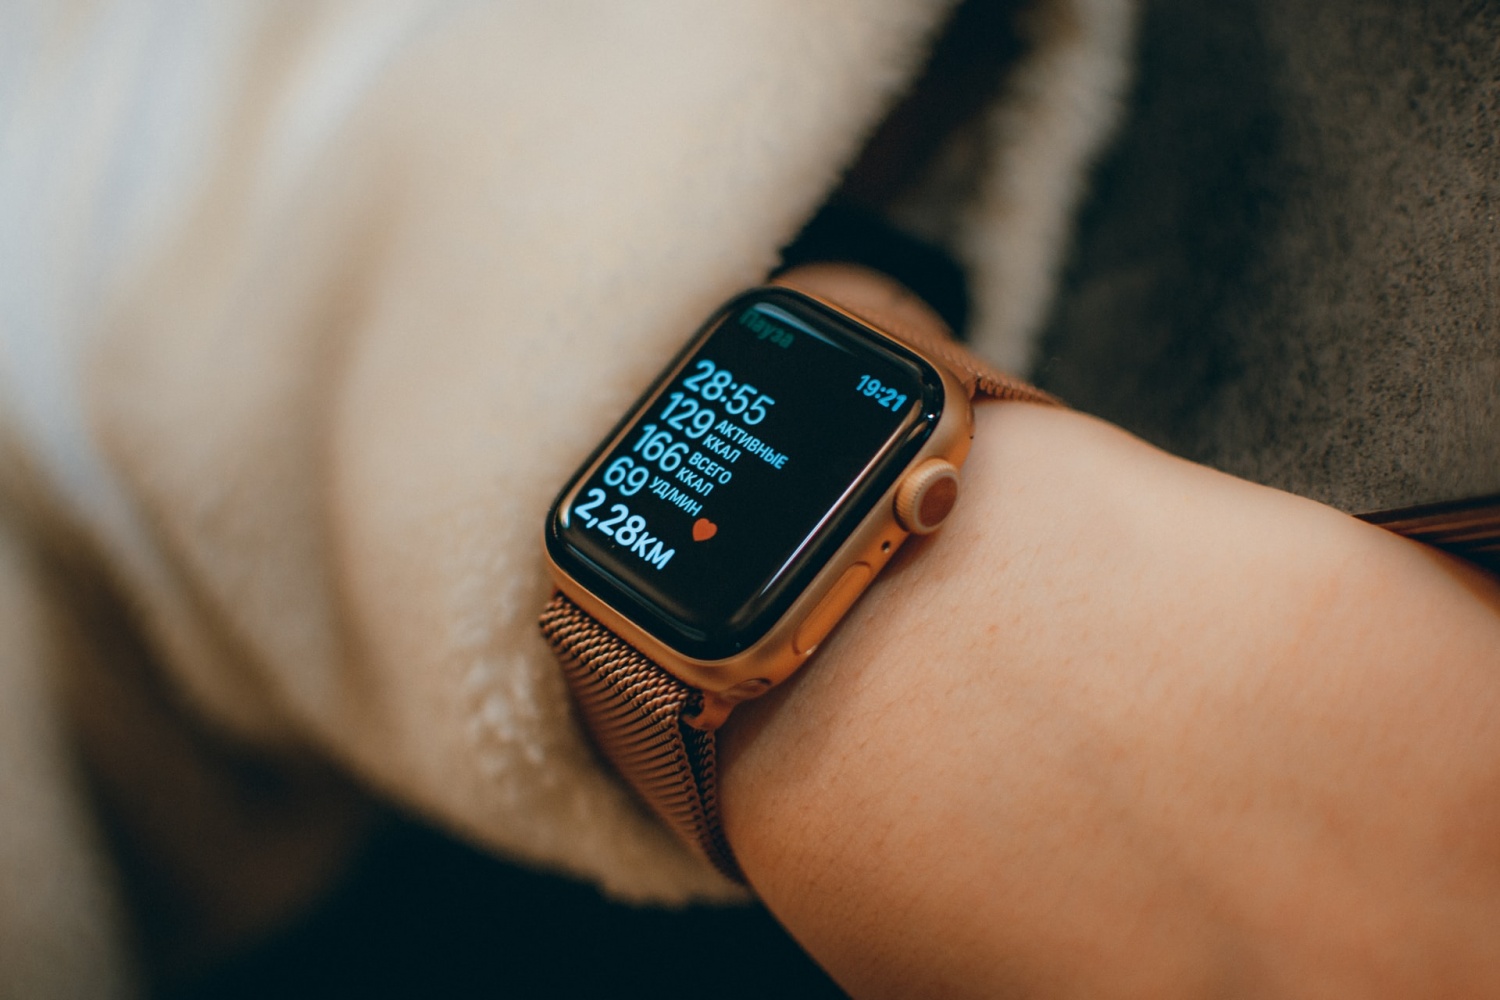 iPhone, Apple Watch Leak Reveals Major Health App: Is Apple Building a New Health Sensor?